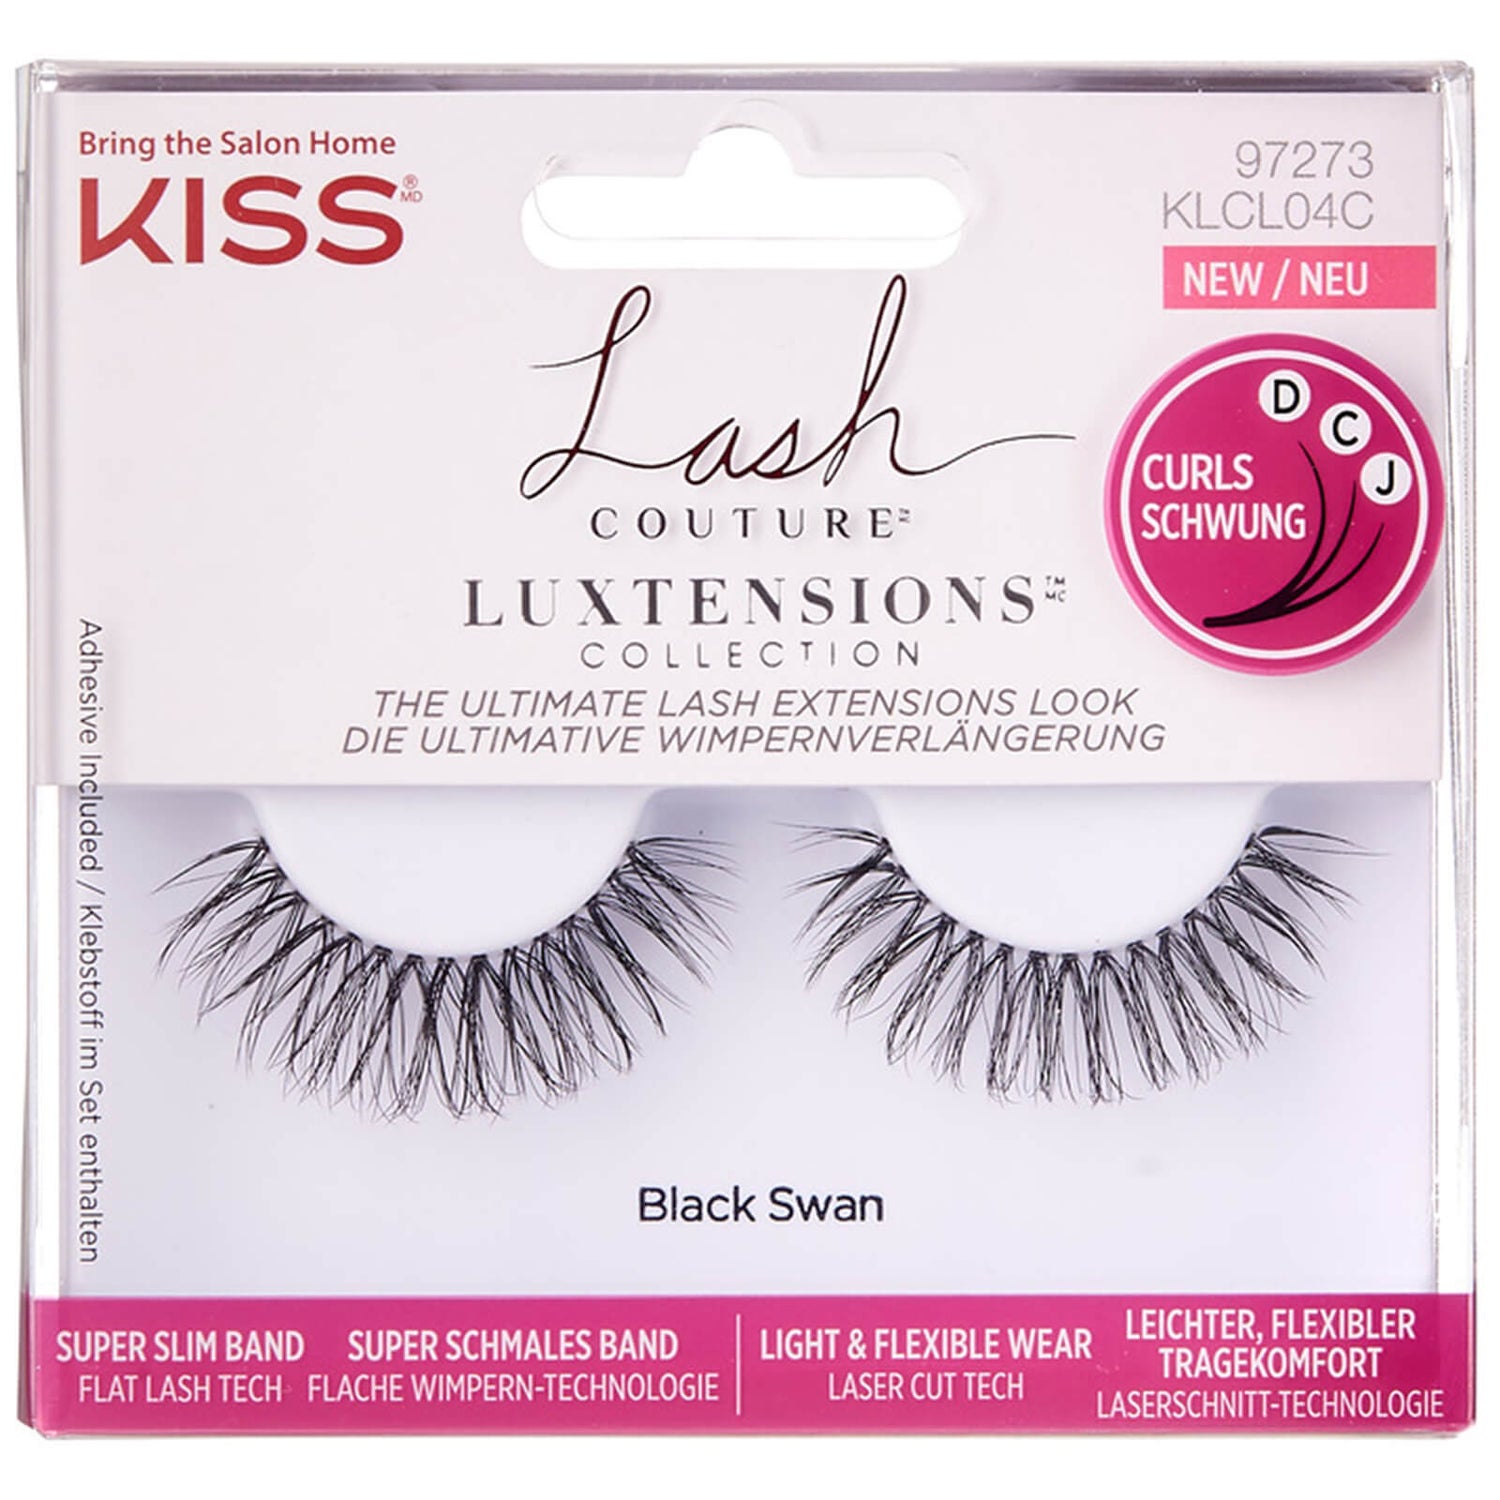 KISS Lash Couture LuXtension (olika alternativ) – Option:Black Swan